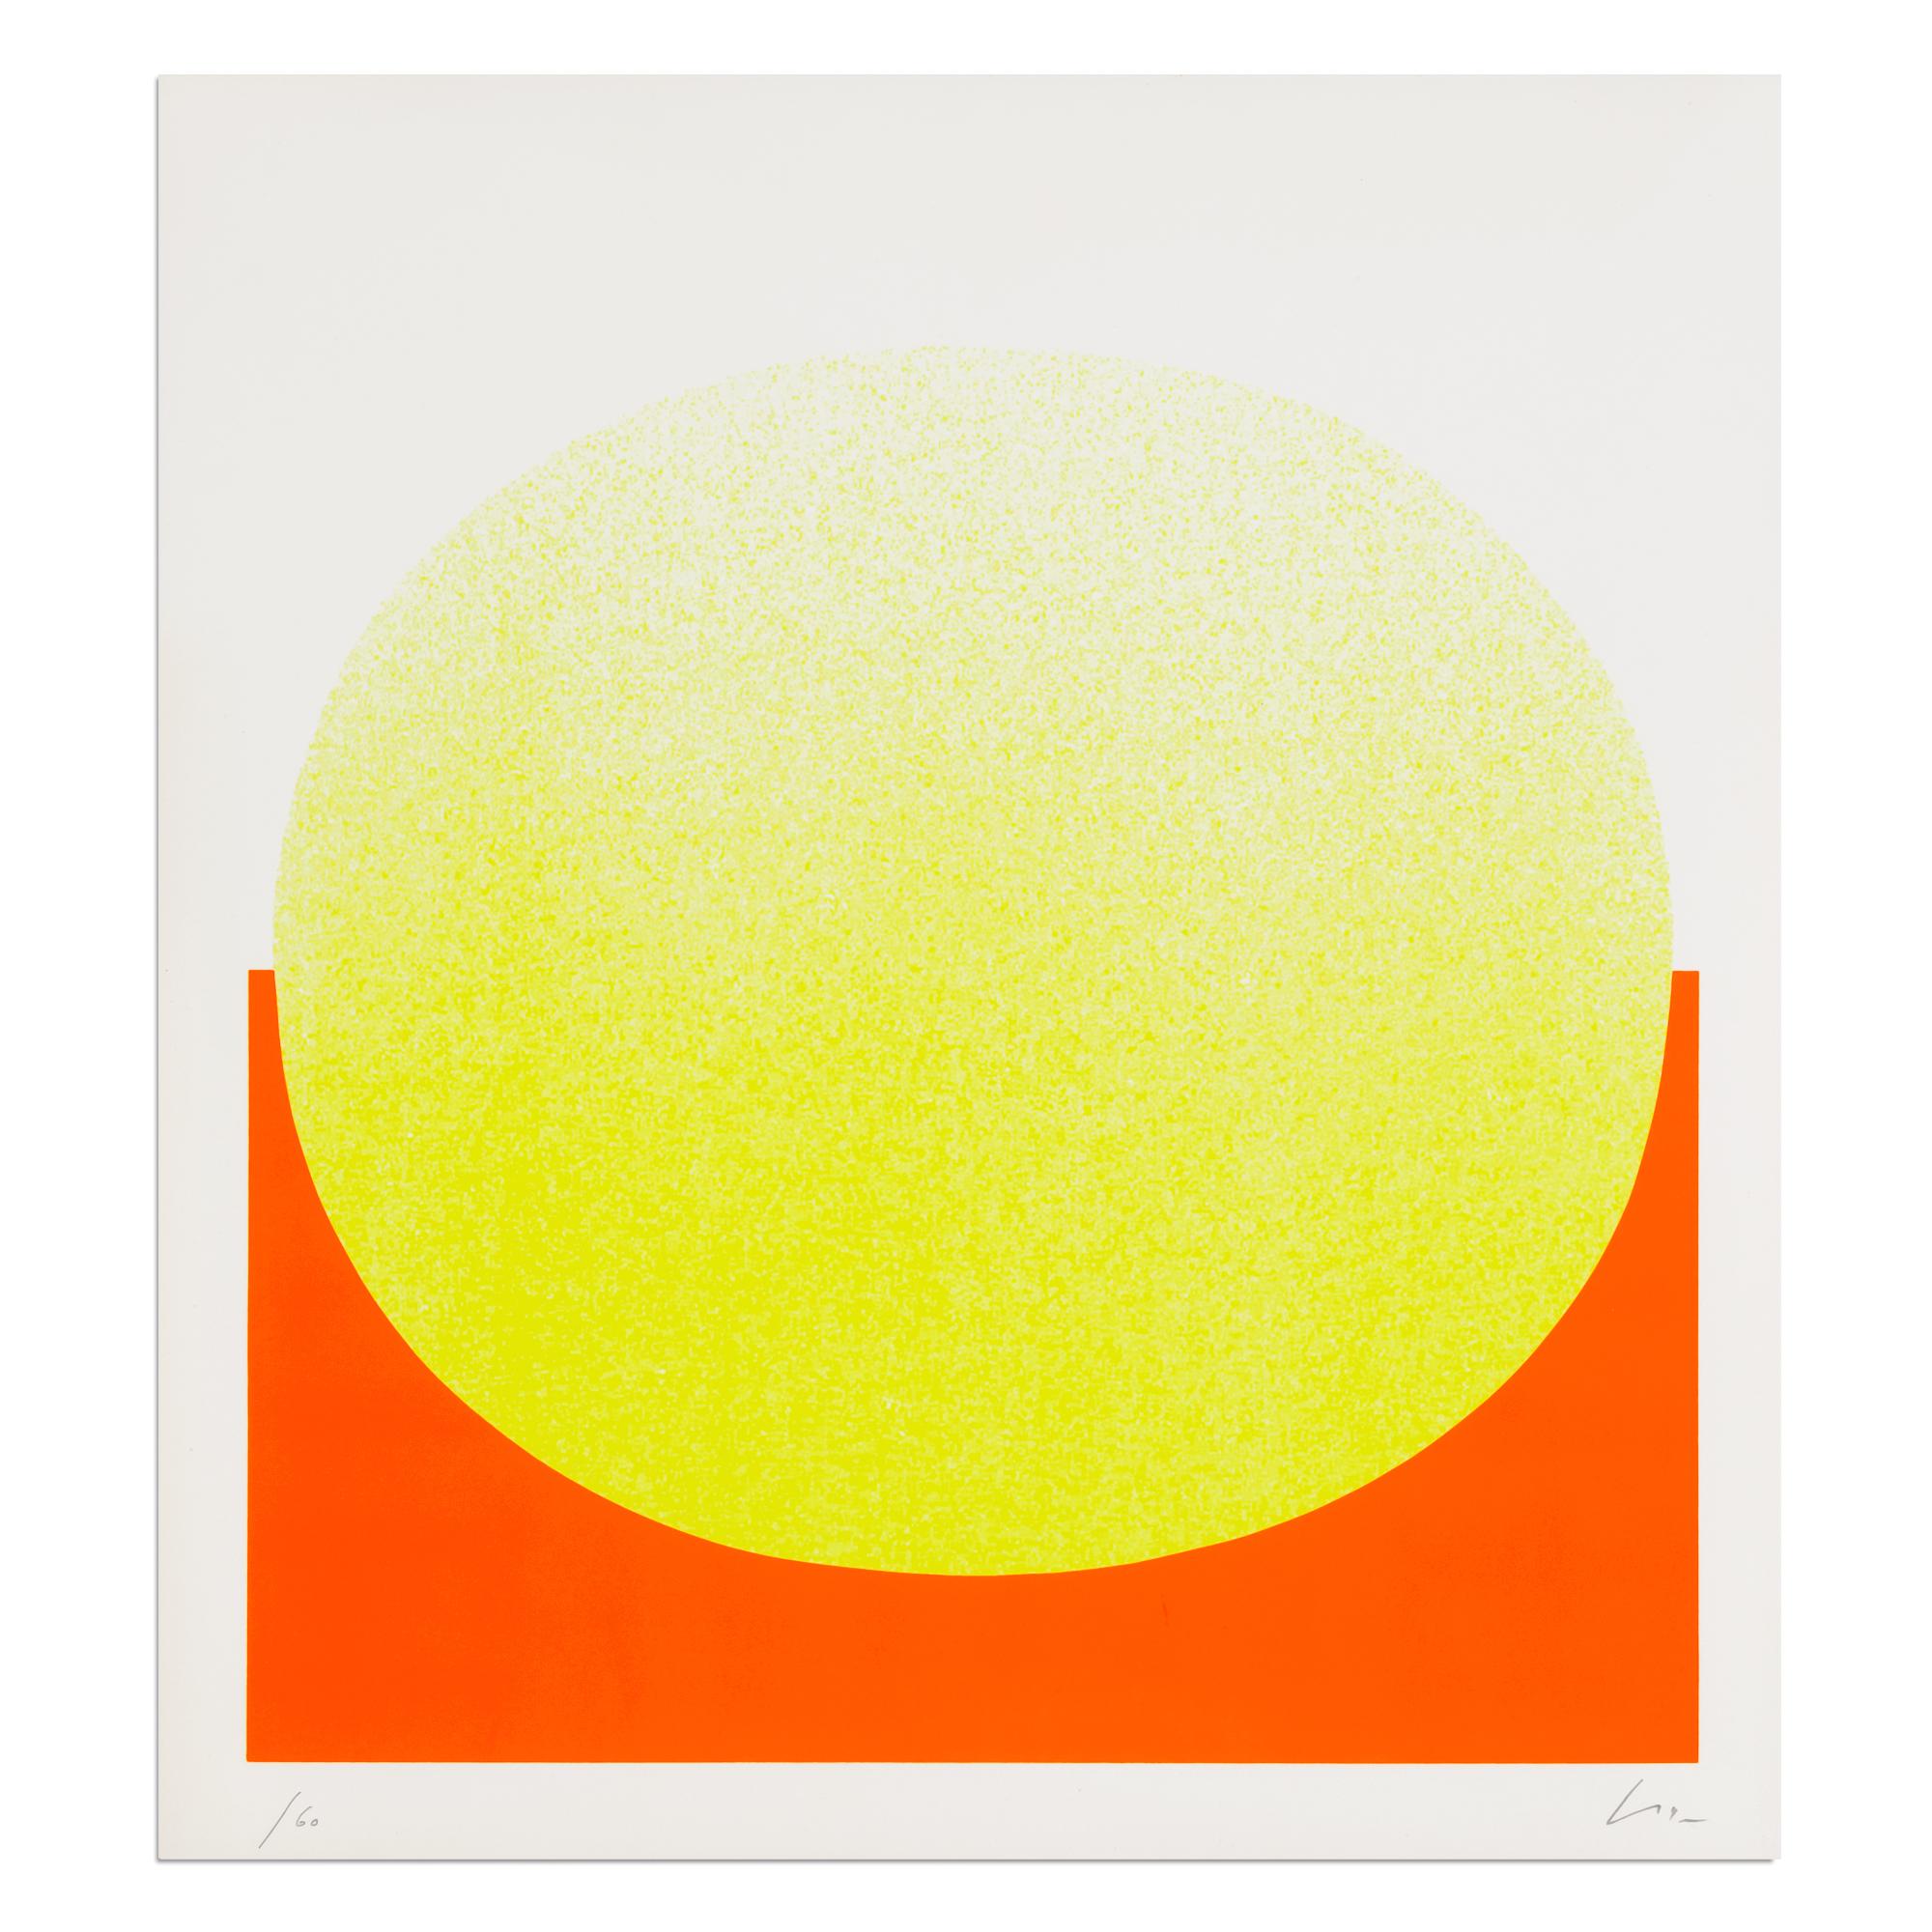 Rupprecht Geiger, Yellow on Orange - Signed Print, Abstract Art, Hard Edge